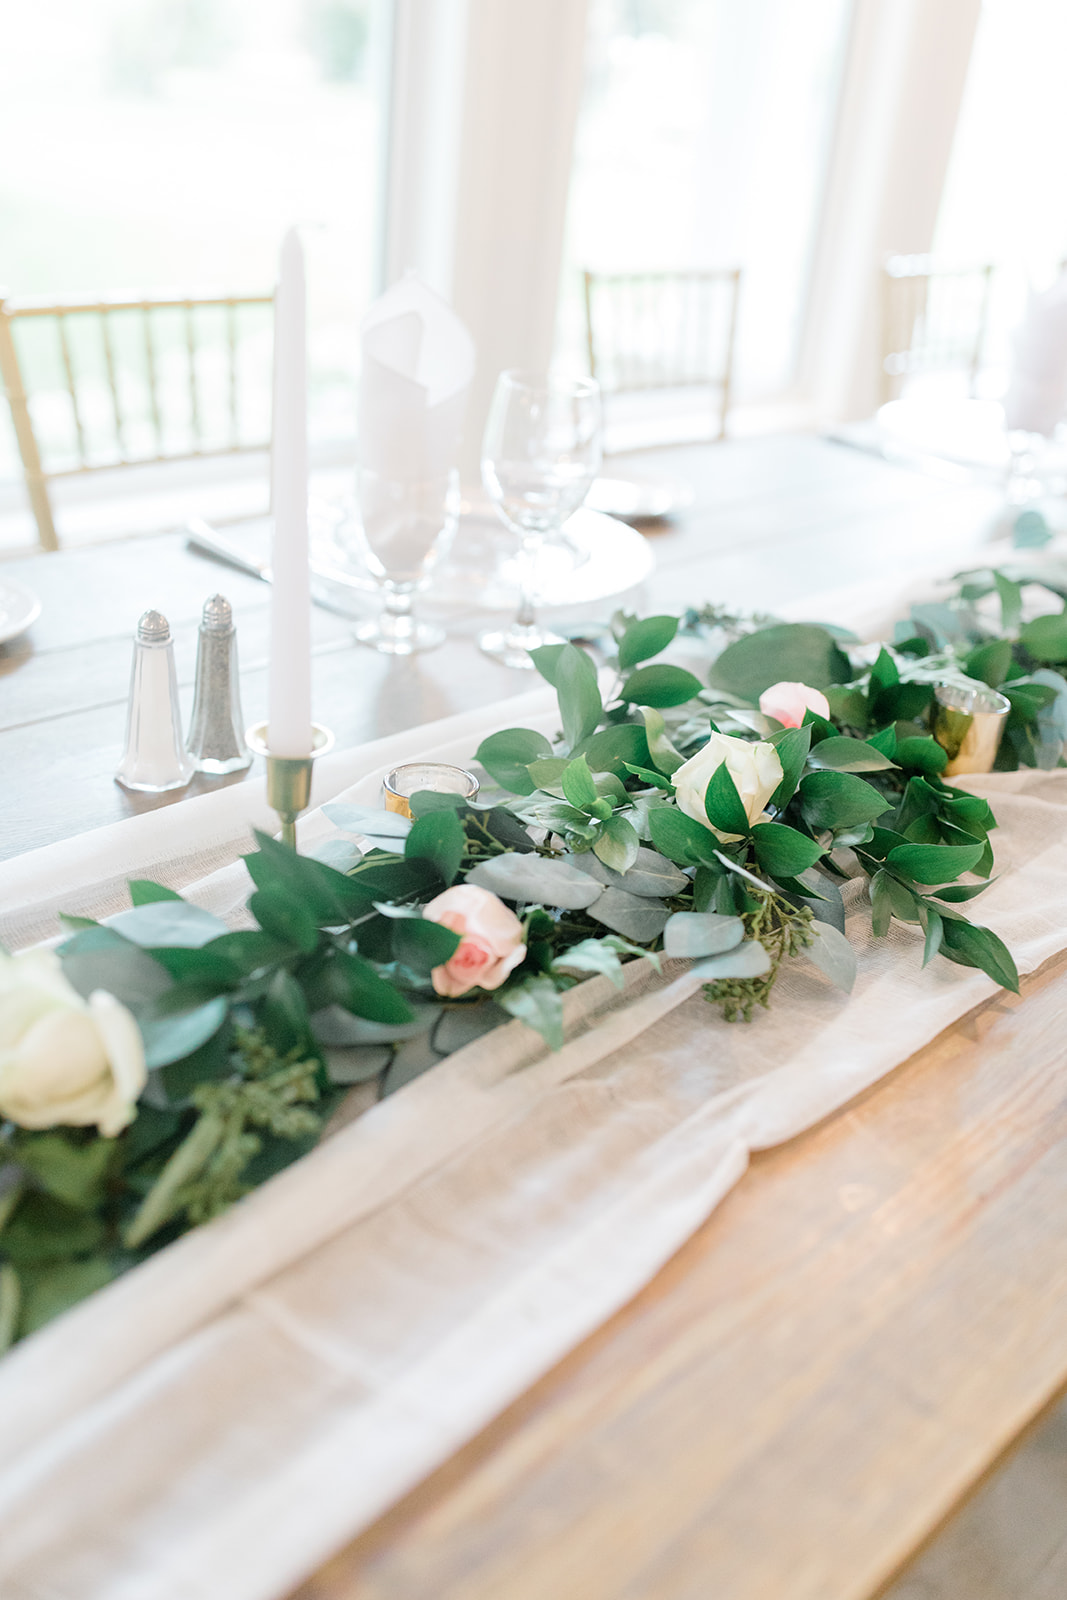 Wedding reception, wedding table arrangement, wedding decor, modern wedding inspiration, blush and greenery table accents